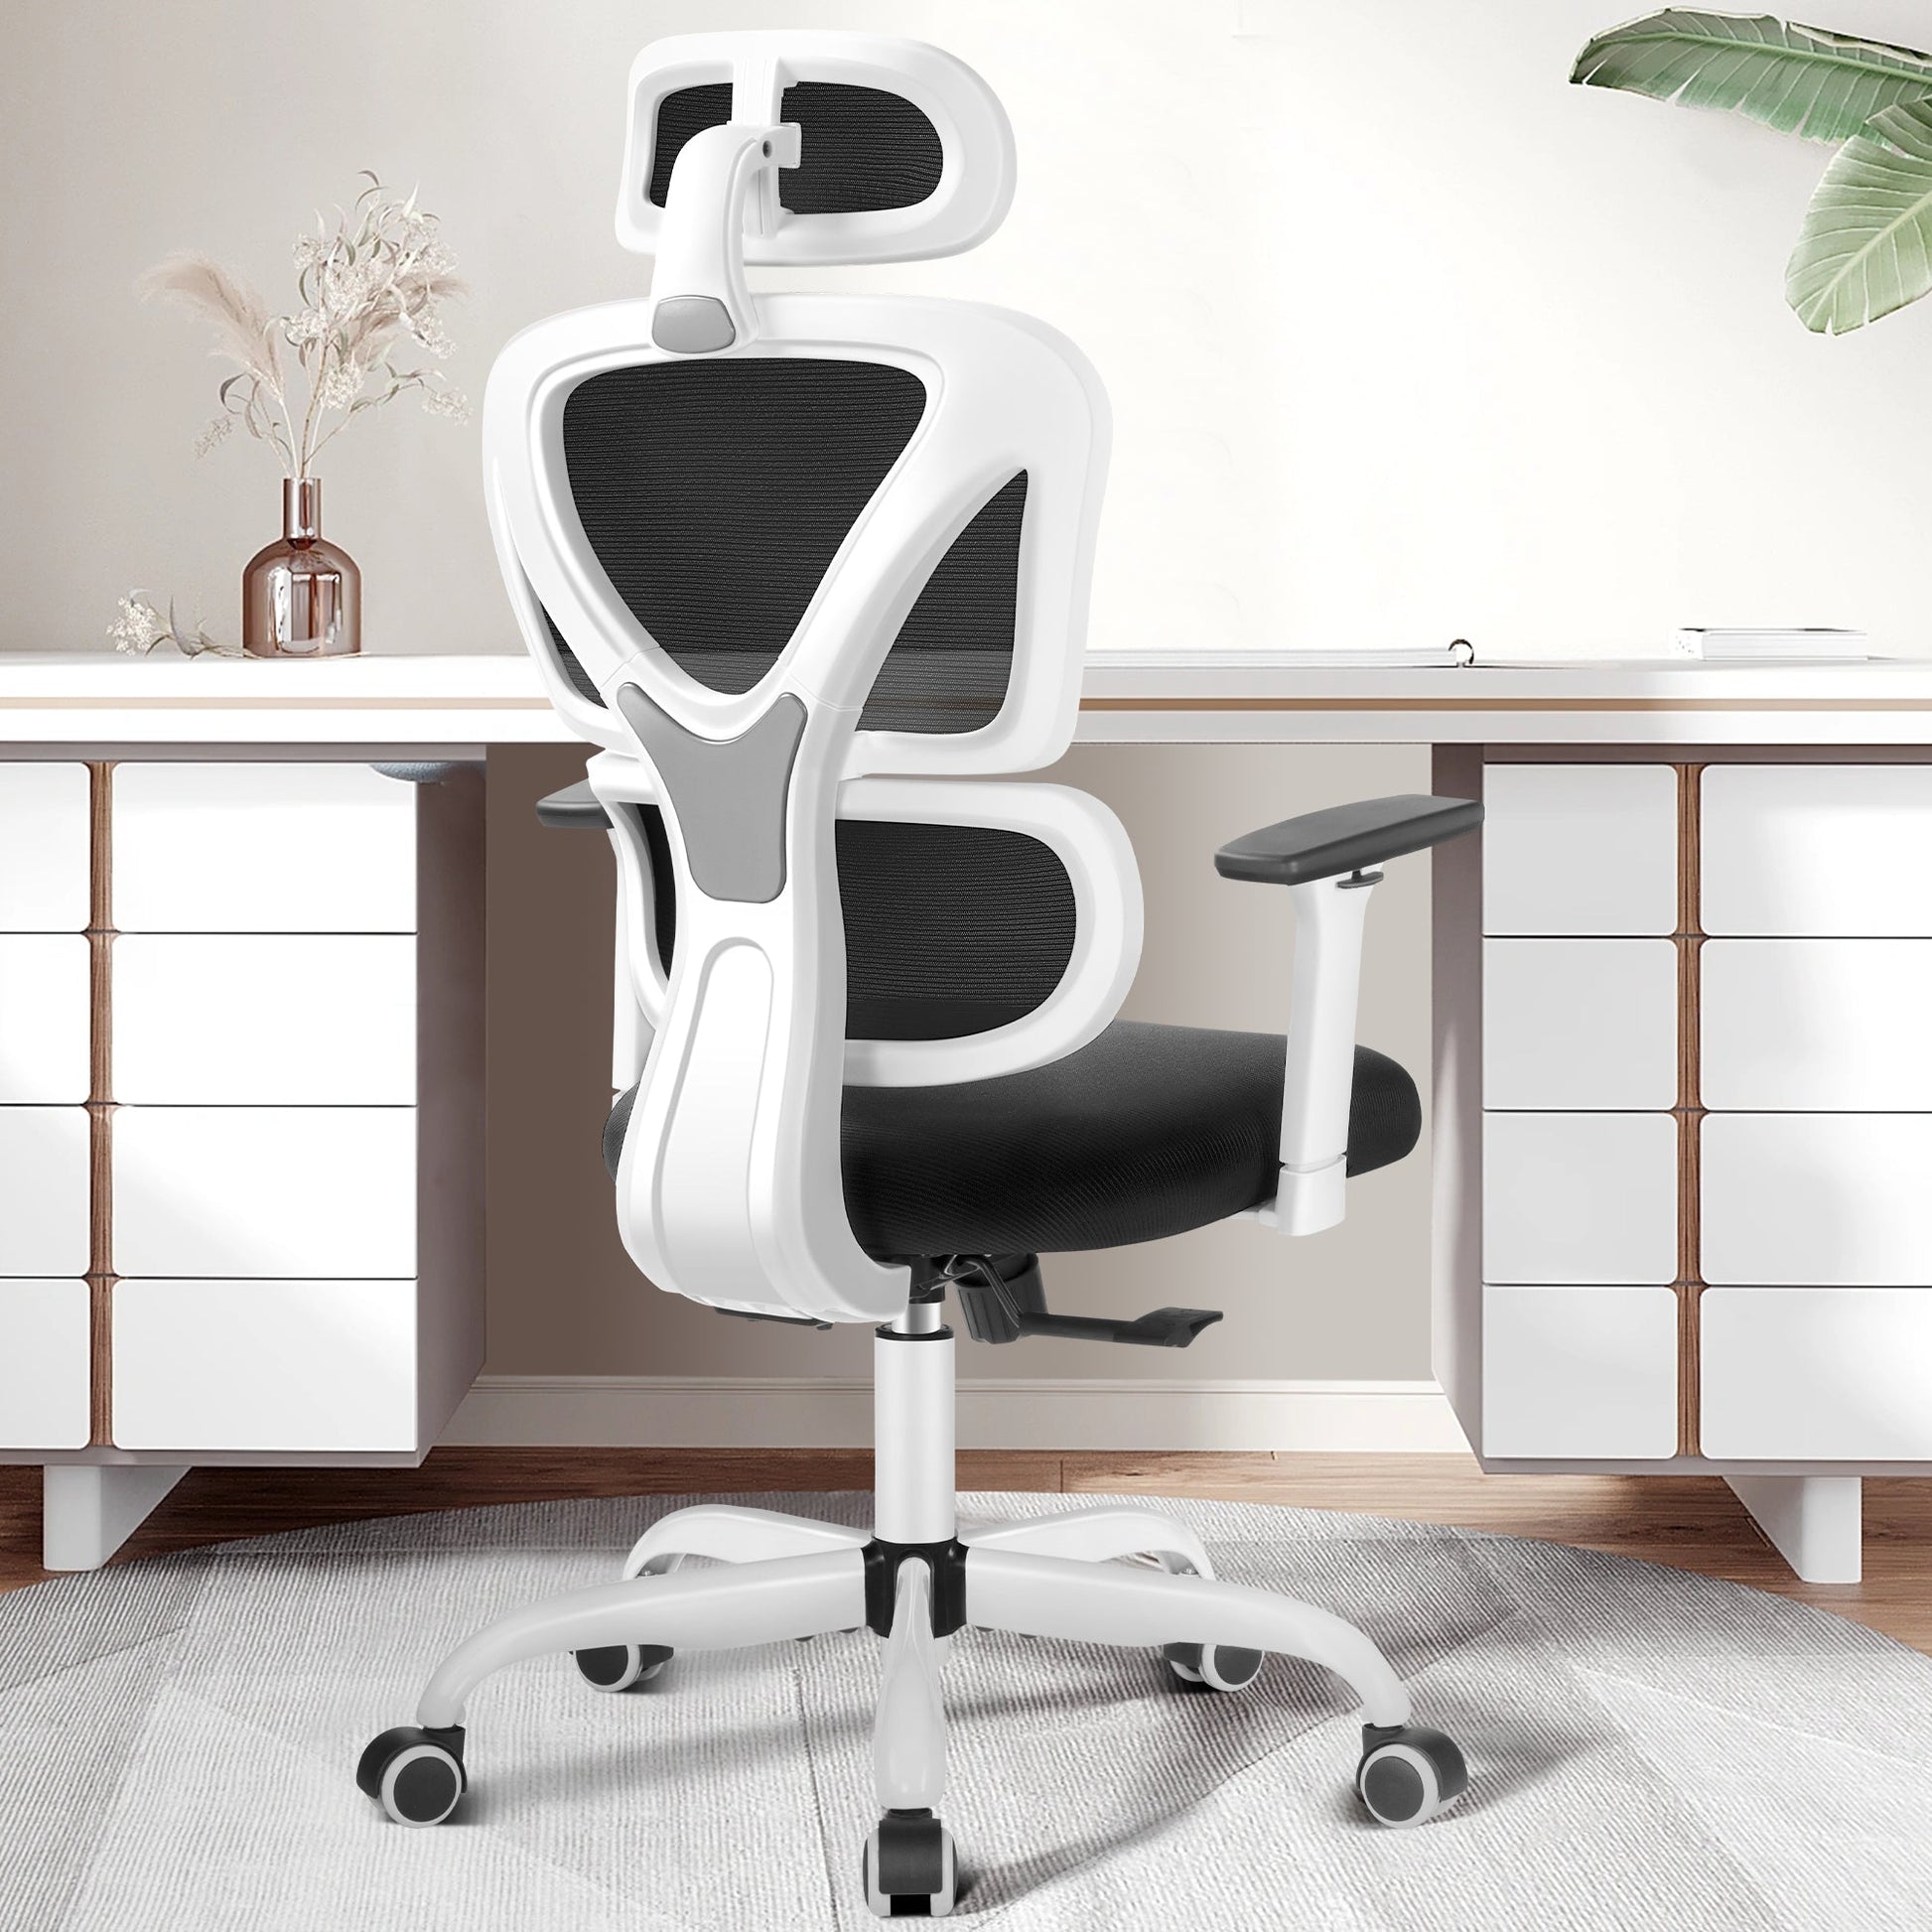 KERDOM office chair Ergonomic desk chair with adjustable headrest